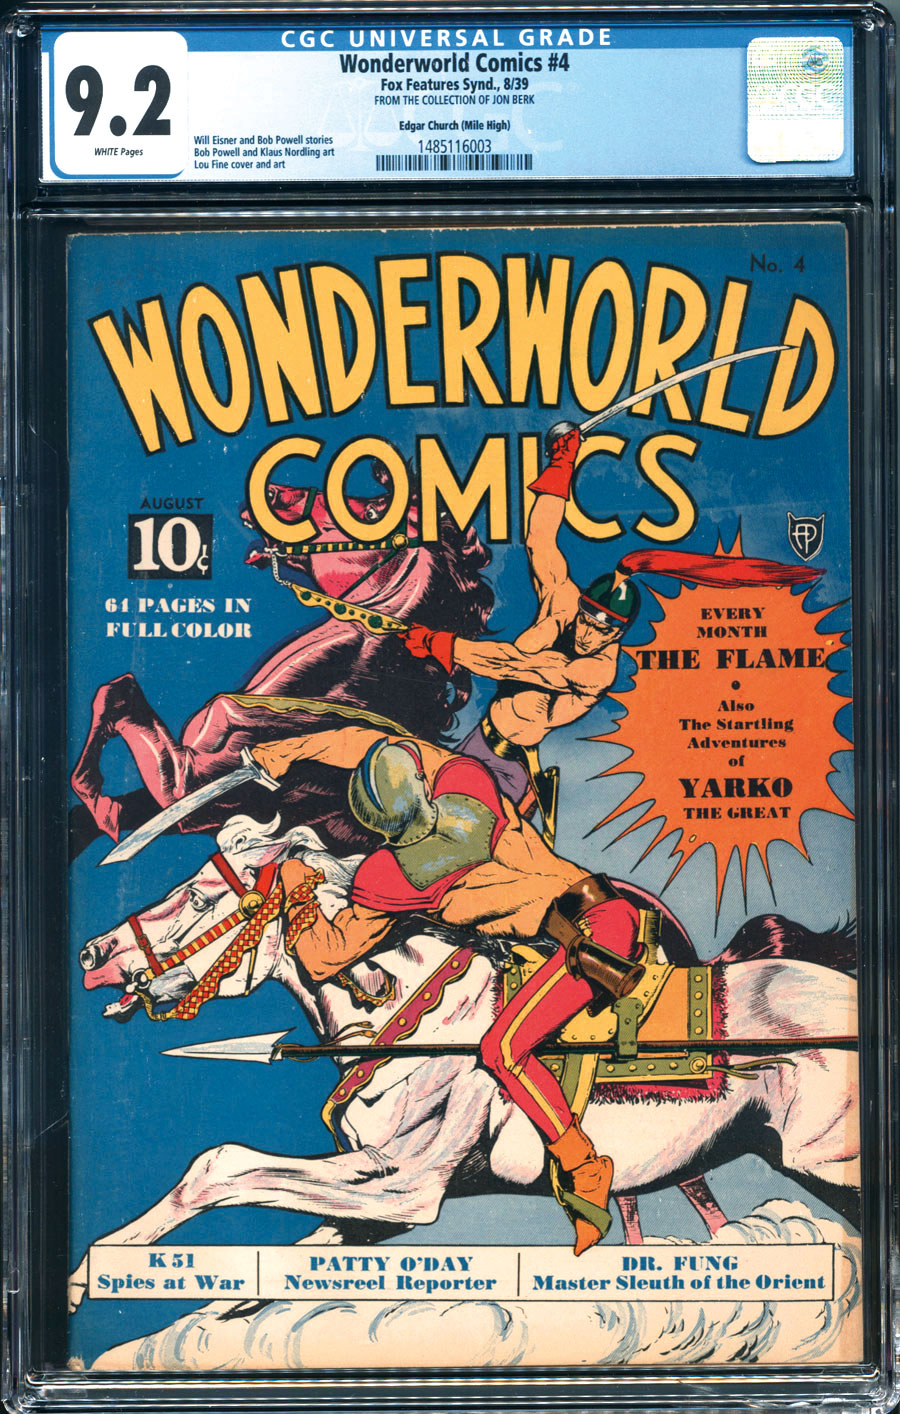 Wonderworld magazine